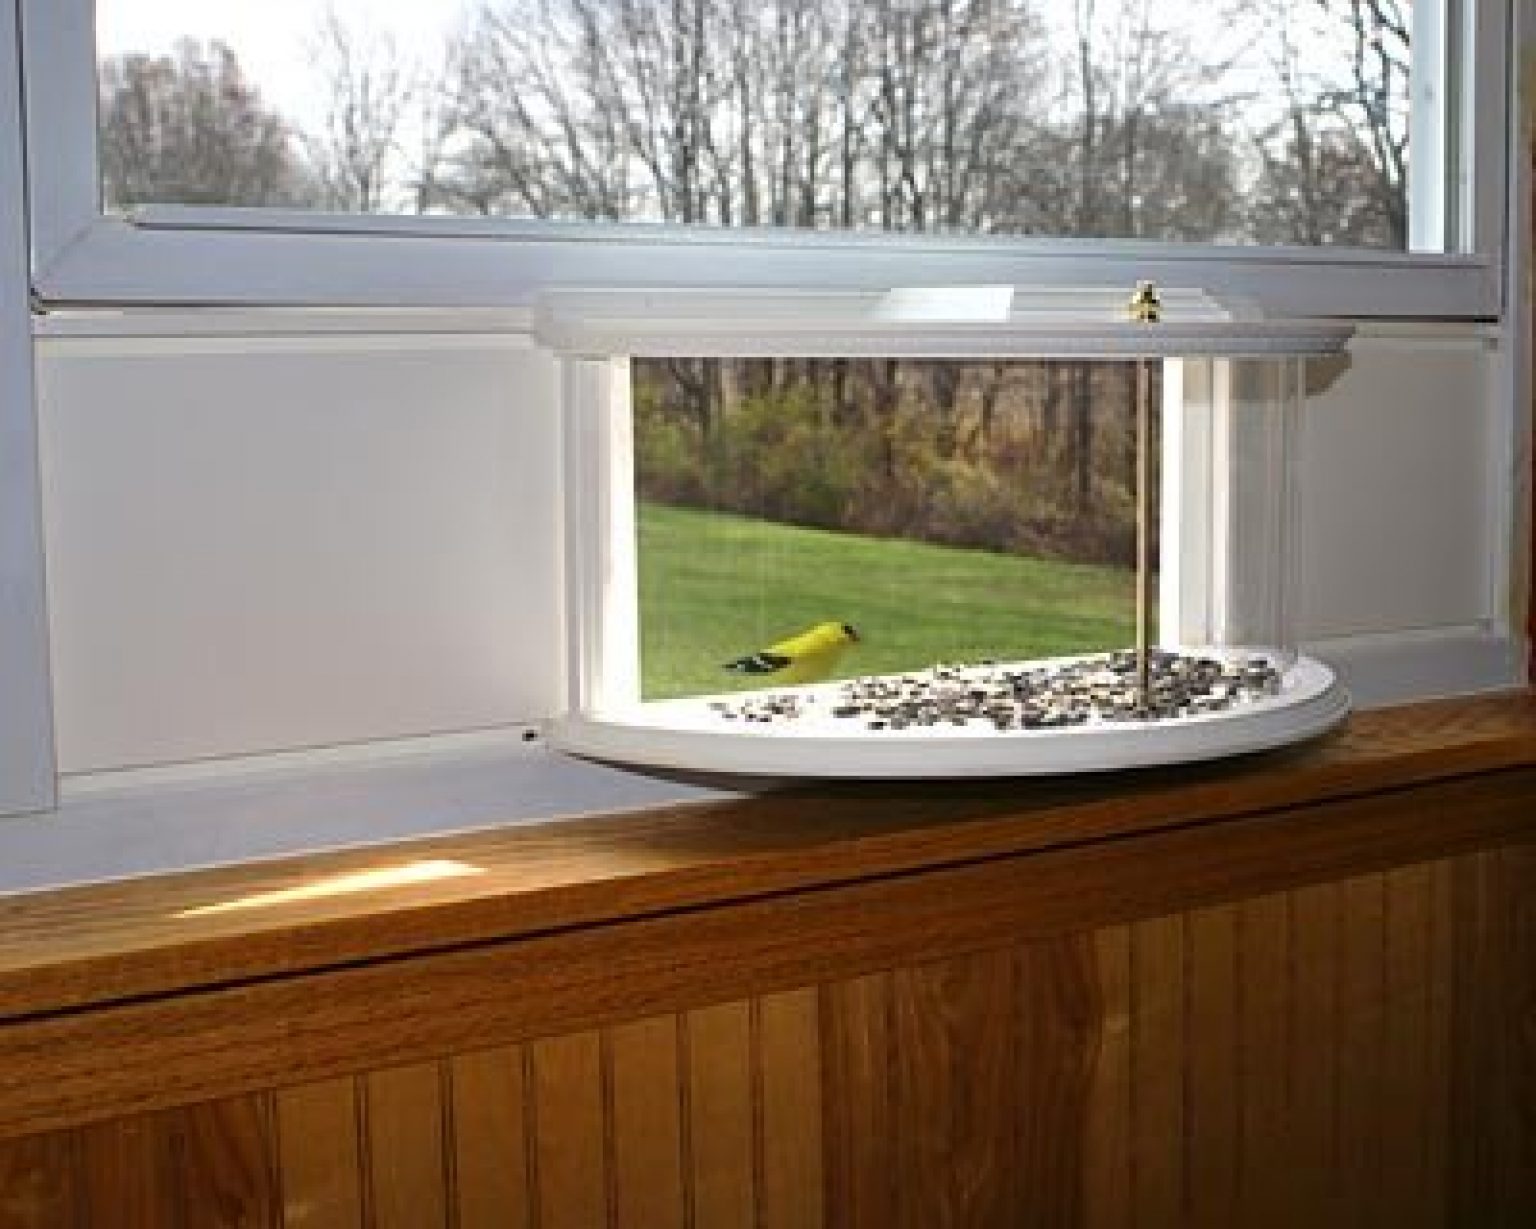 best window bird feeder reviews